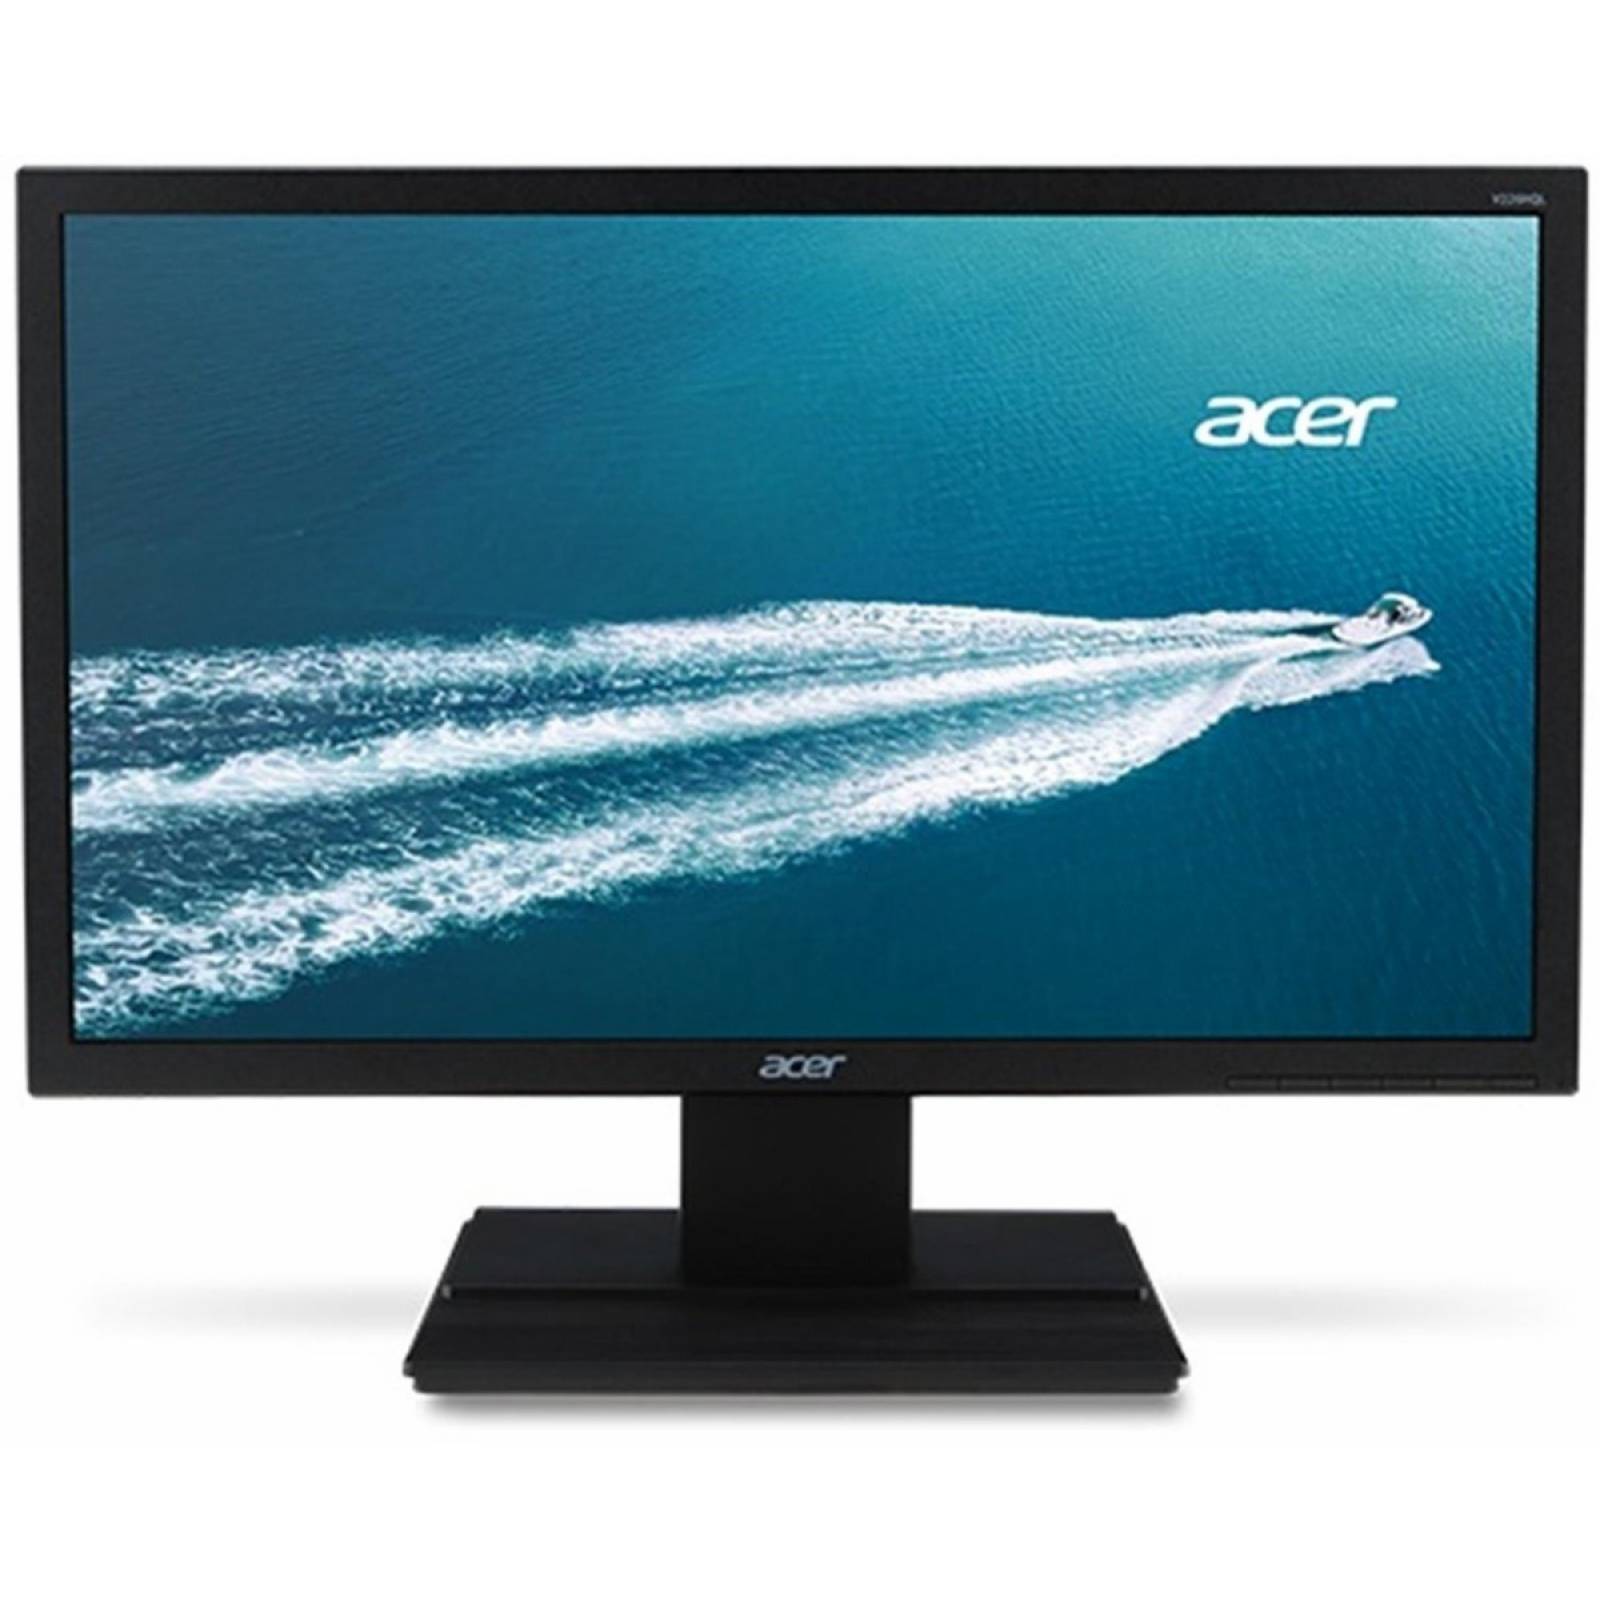 Monitor Acer V206hql Bb 195 Led Vga Vesa Negro 3wty